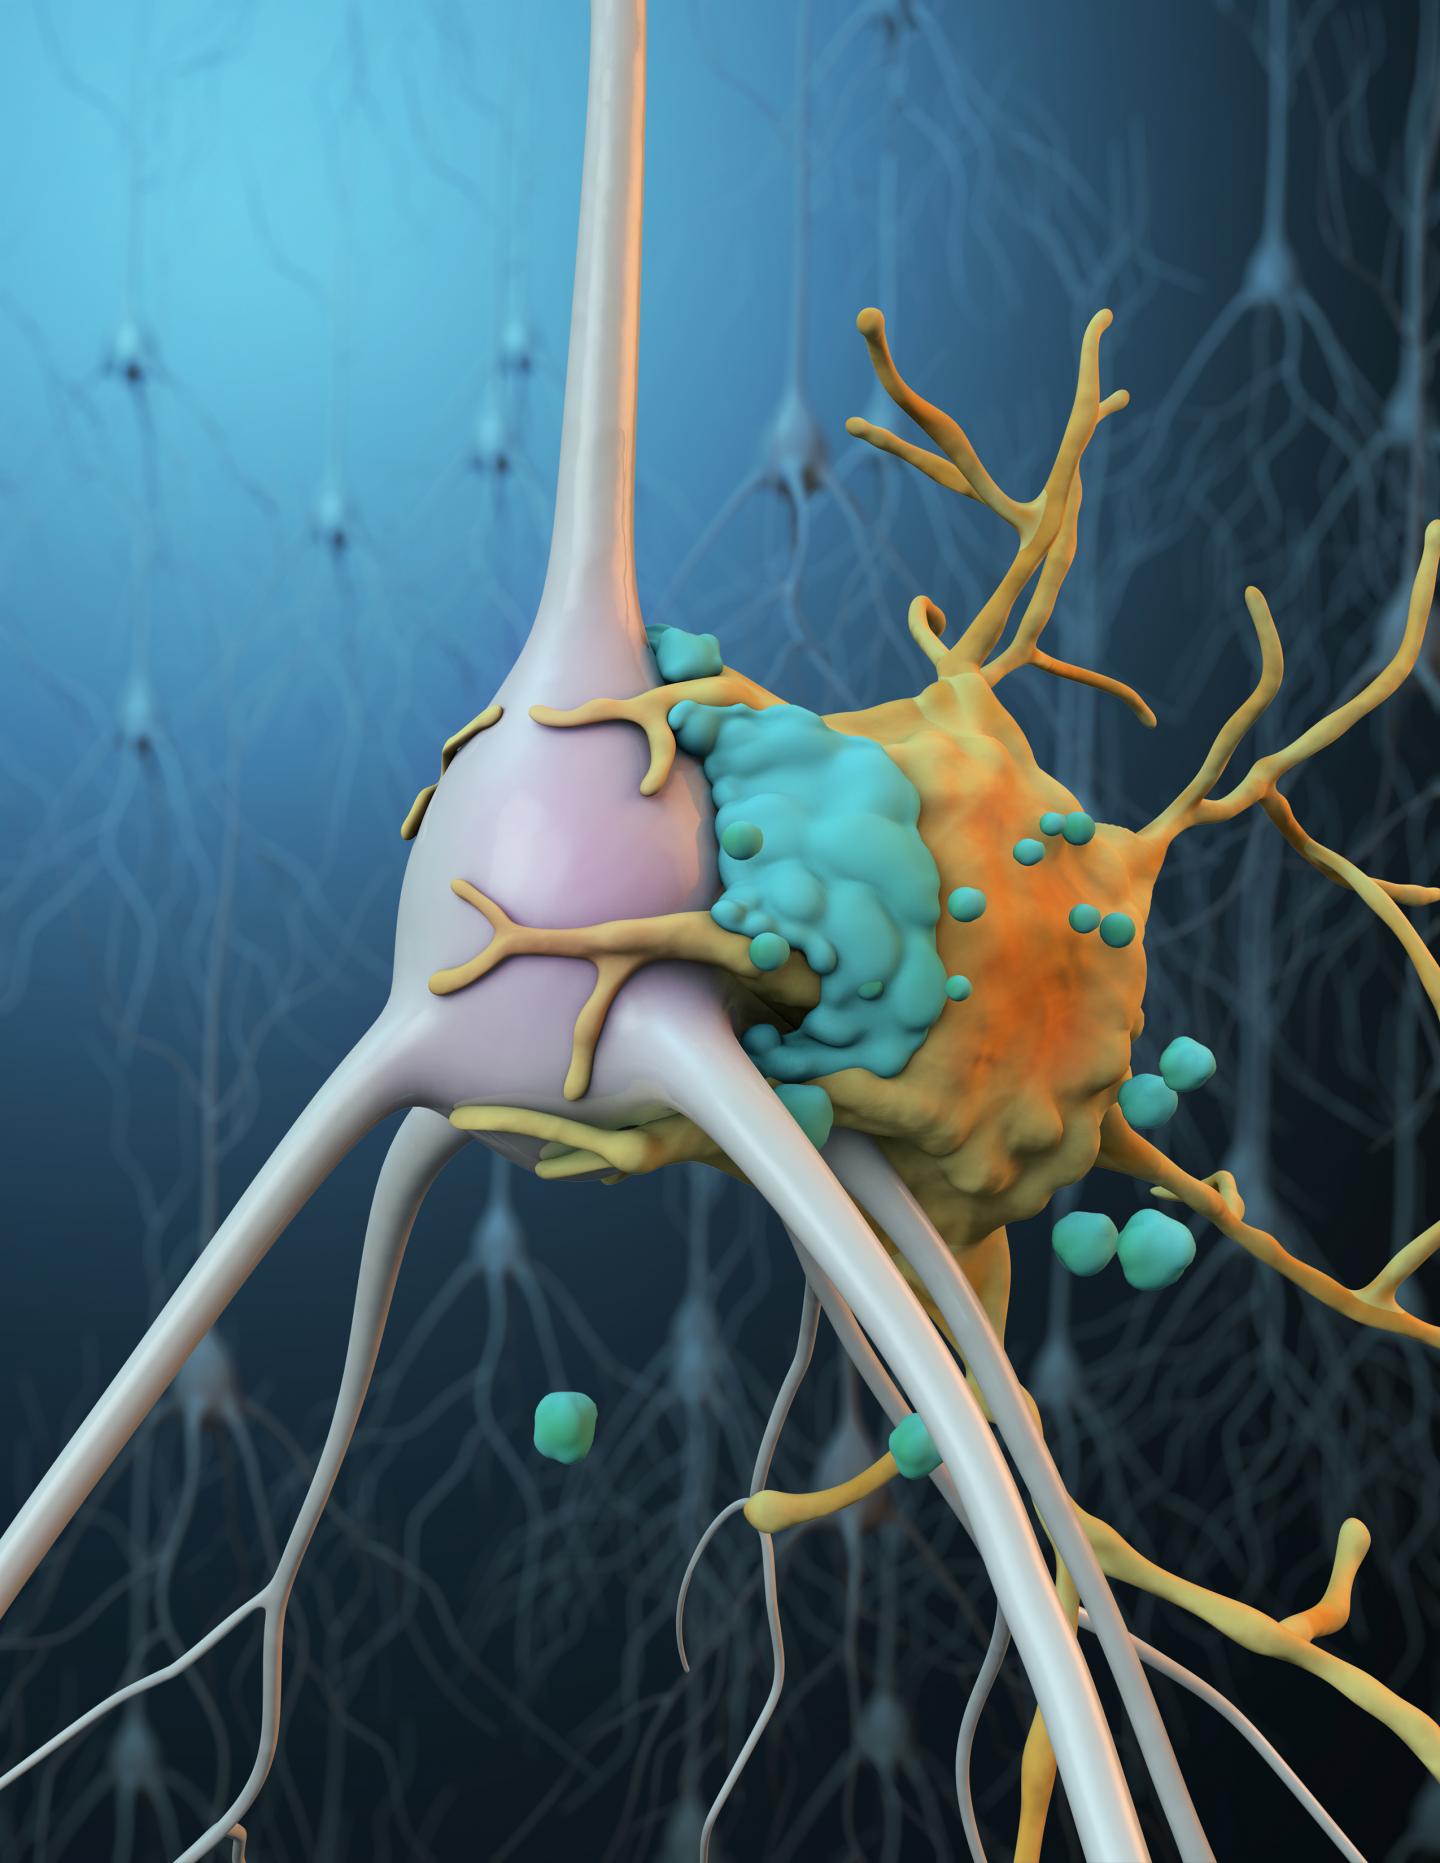 Sylized Illustration of Microglia Phagocytosis of a stressed neuron